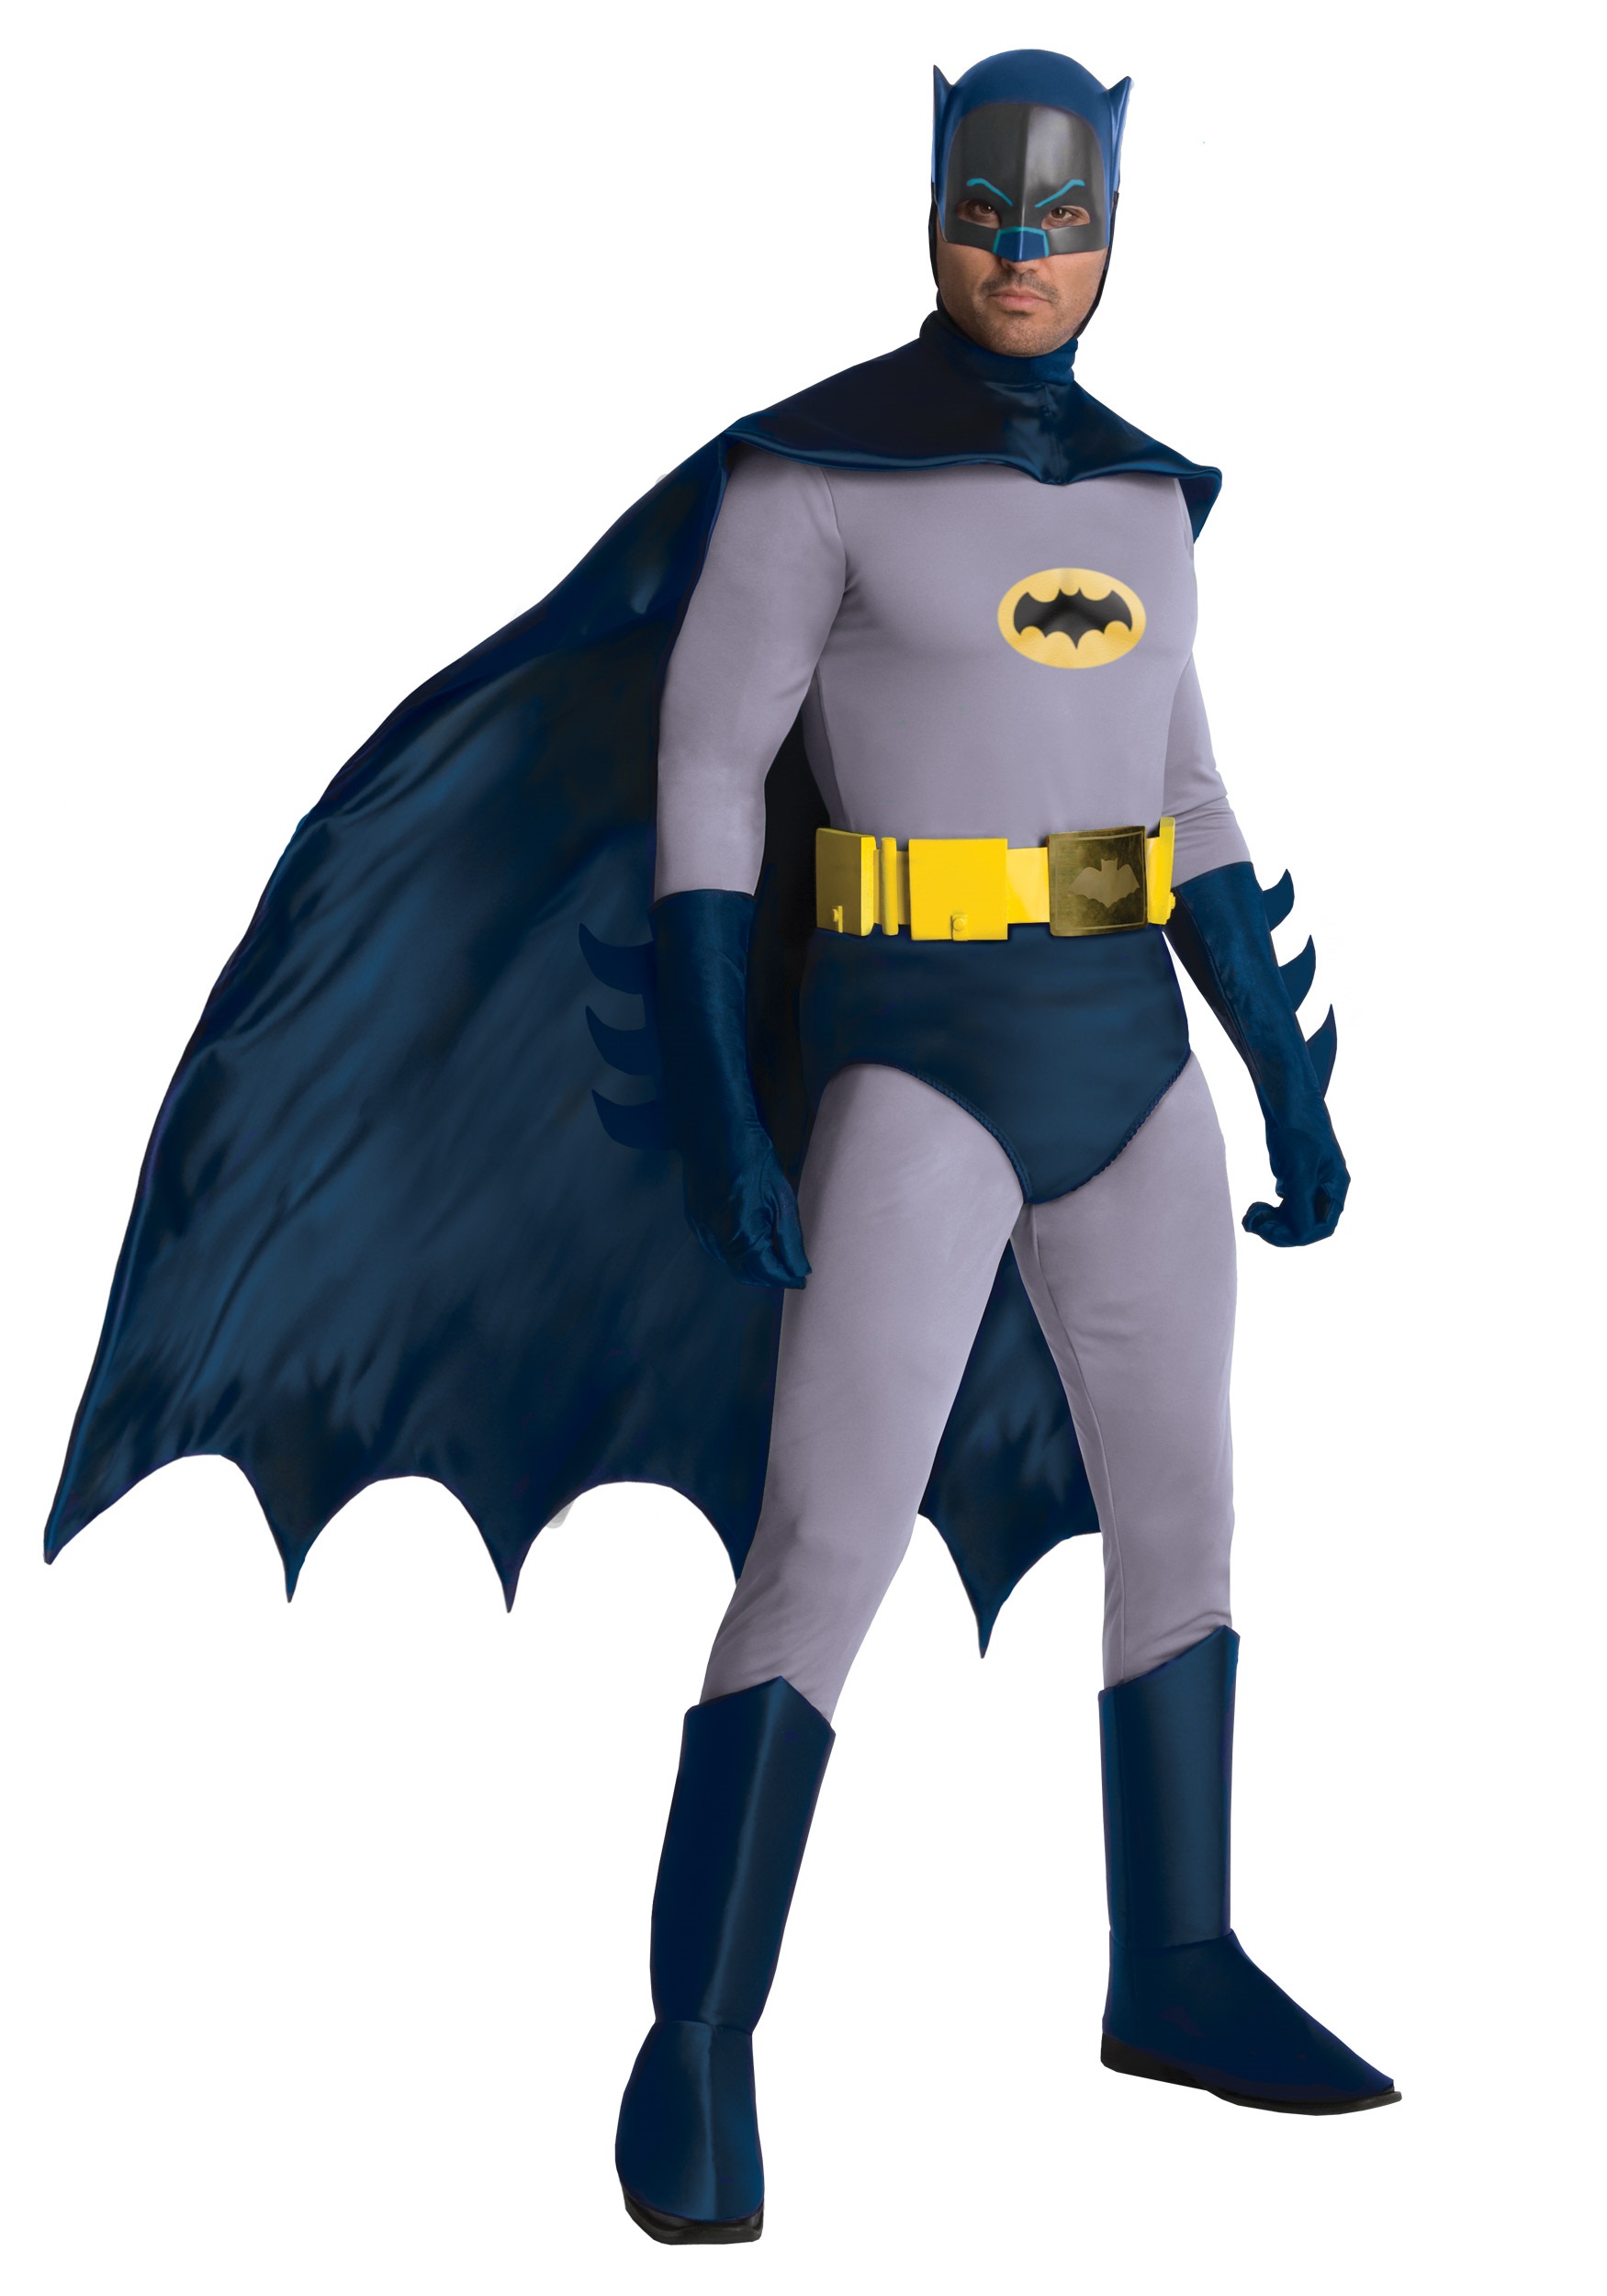 6.) Men's High Quality Dawn of Justice Batman Costumes